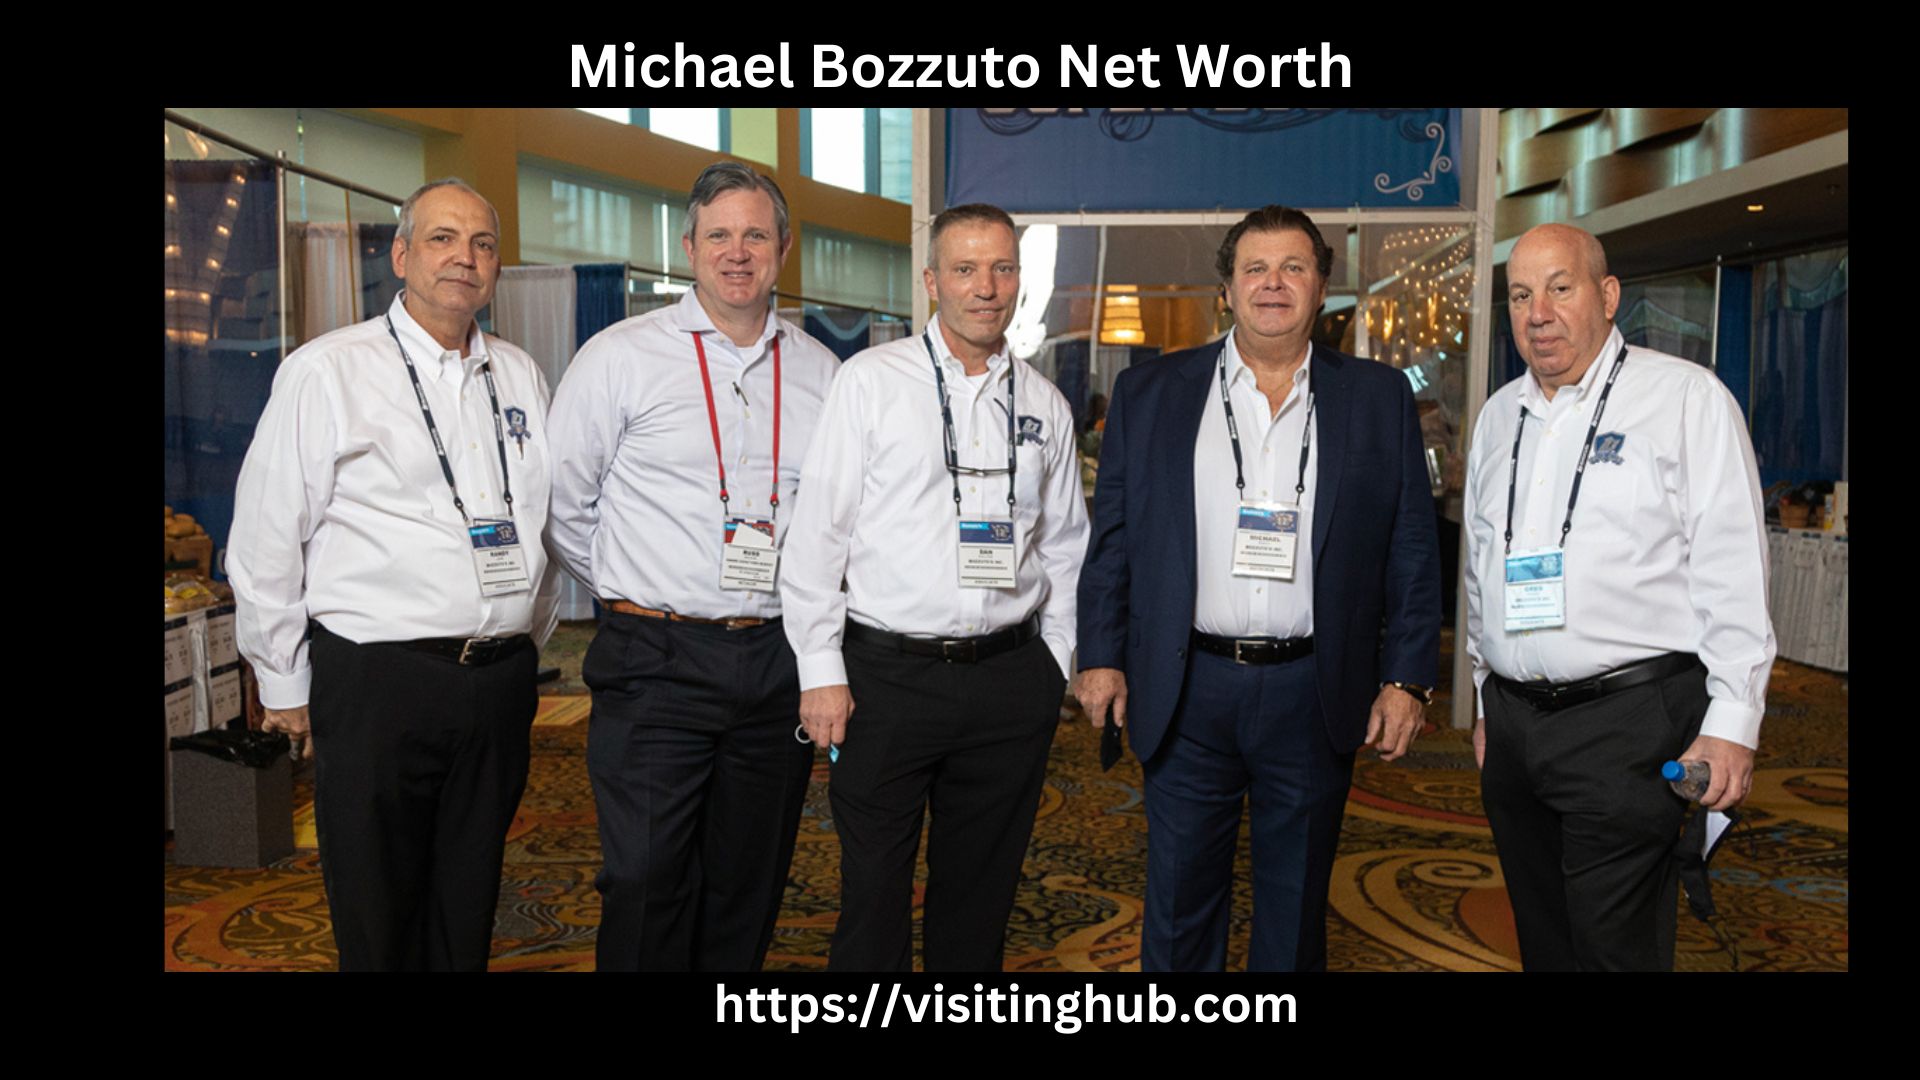 Michael Bozzuto Net Worth